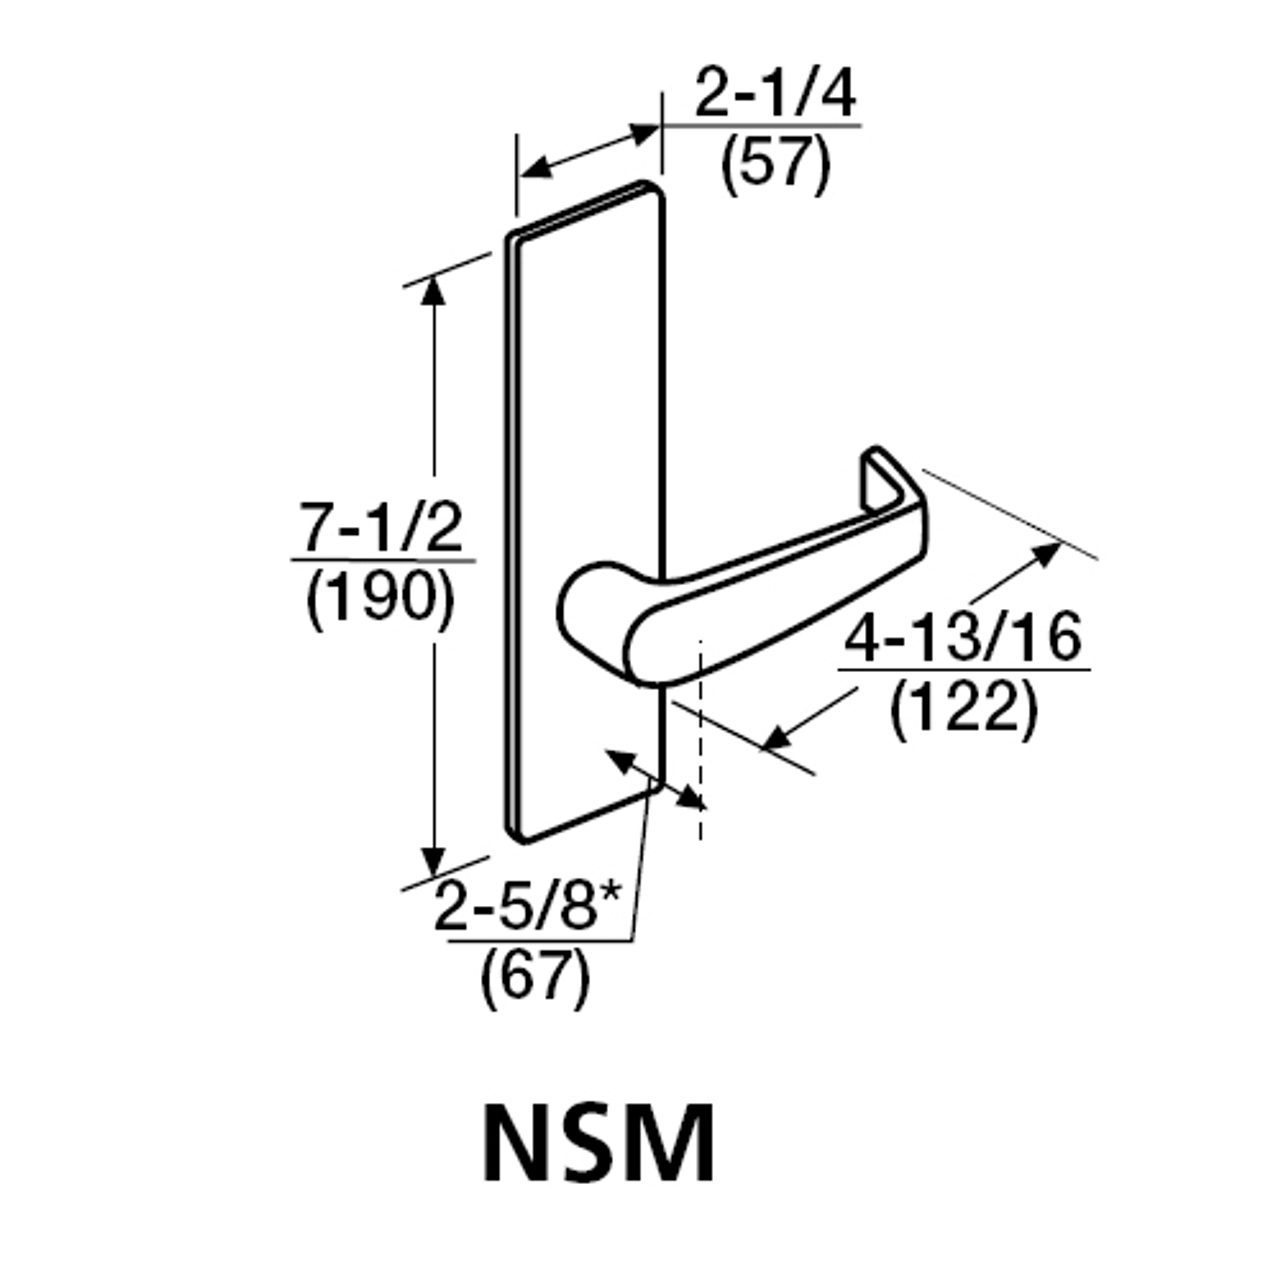 ML2065-NSM-618-LC Corbin Russwin ML2000 Series Mortise Dormitory Locksets with Newport Lever in Bright Nickel